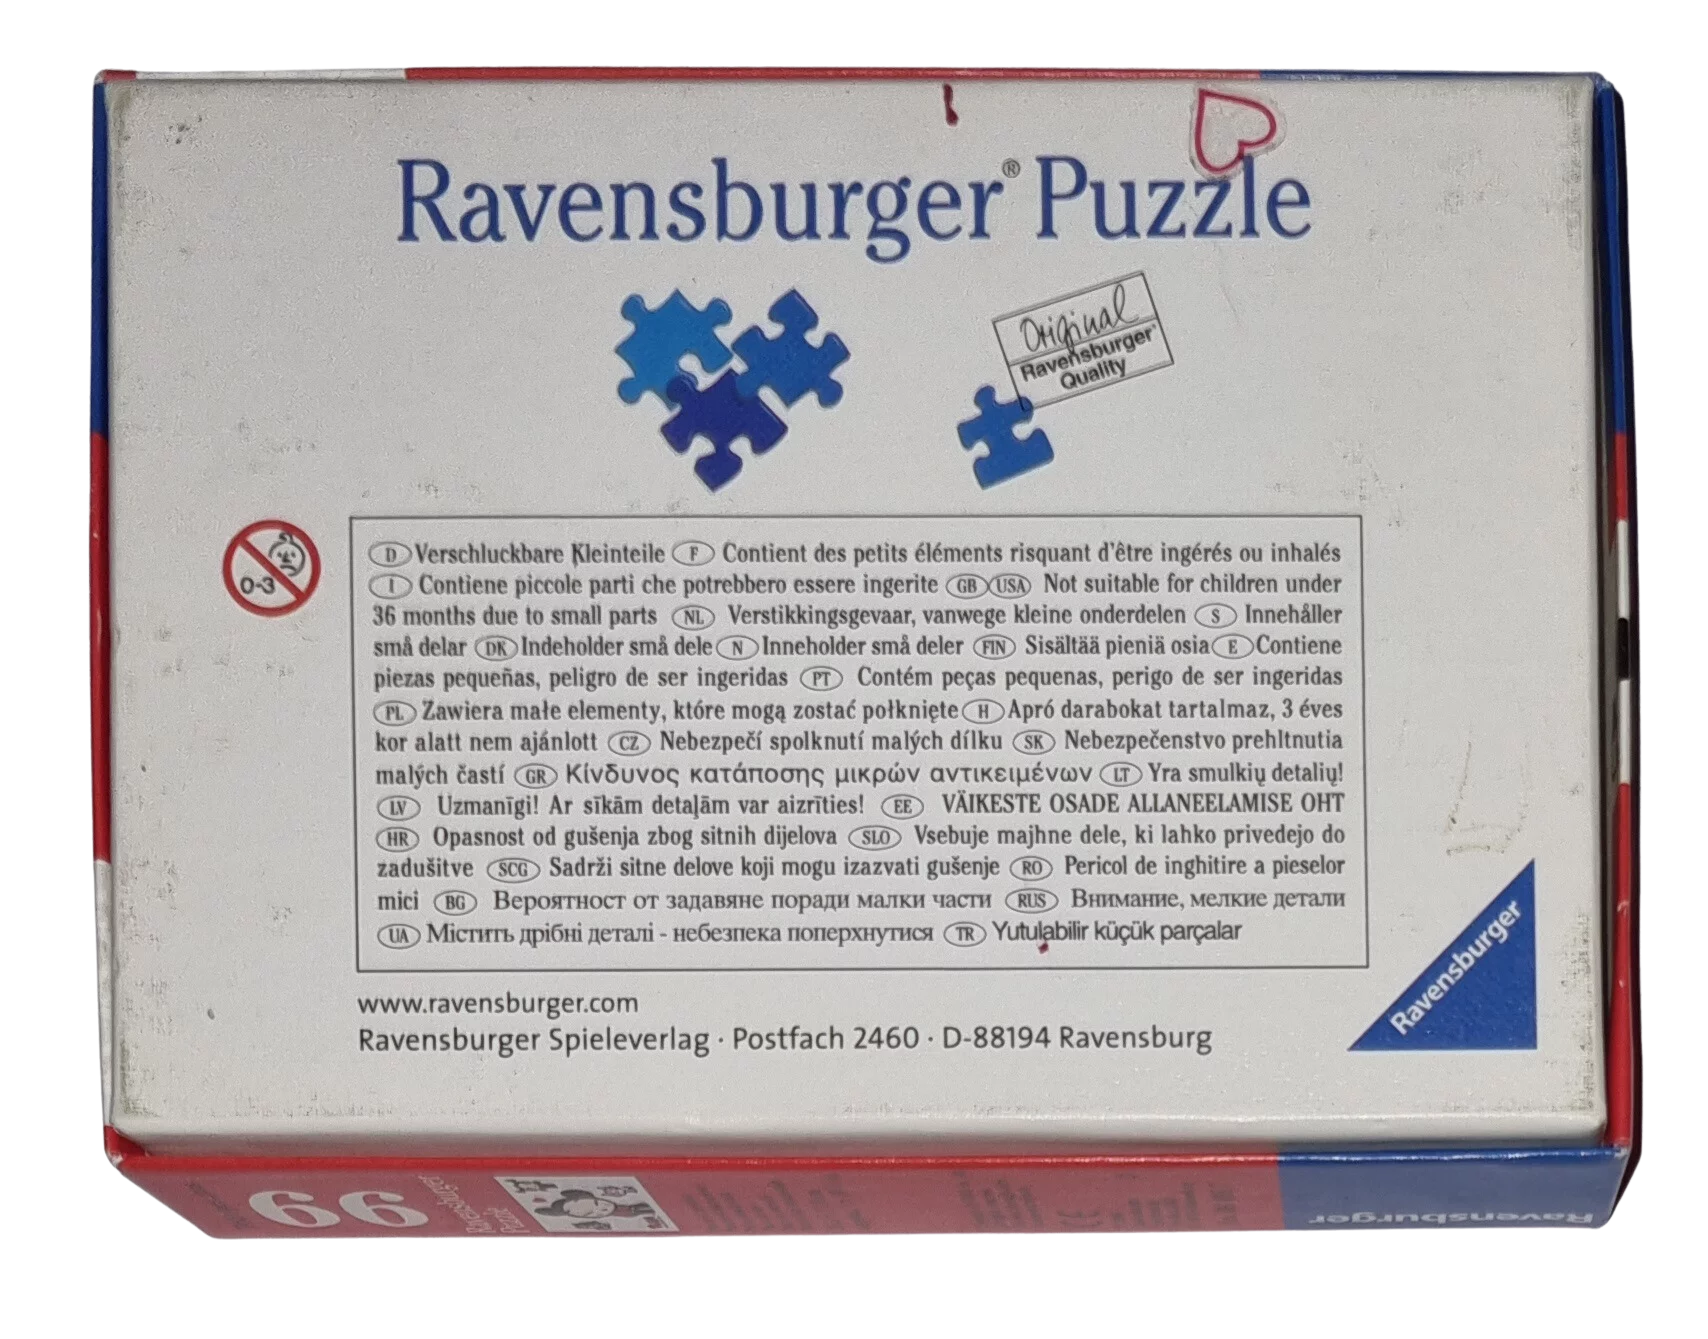 Ravensburger Puzzle 99 Teile 094967 Pucca ist verliebt